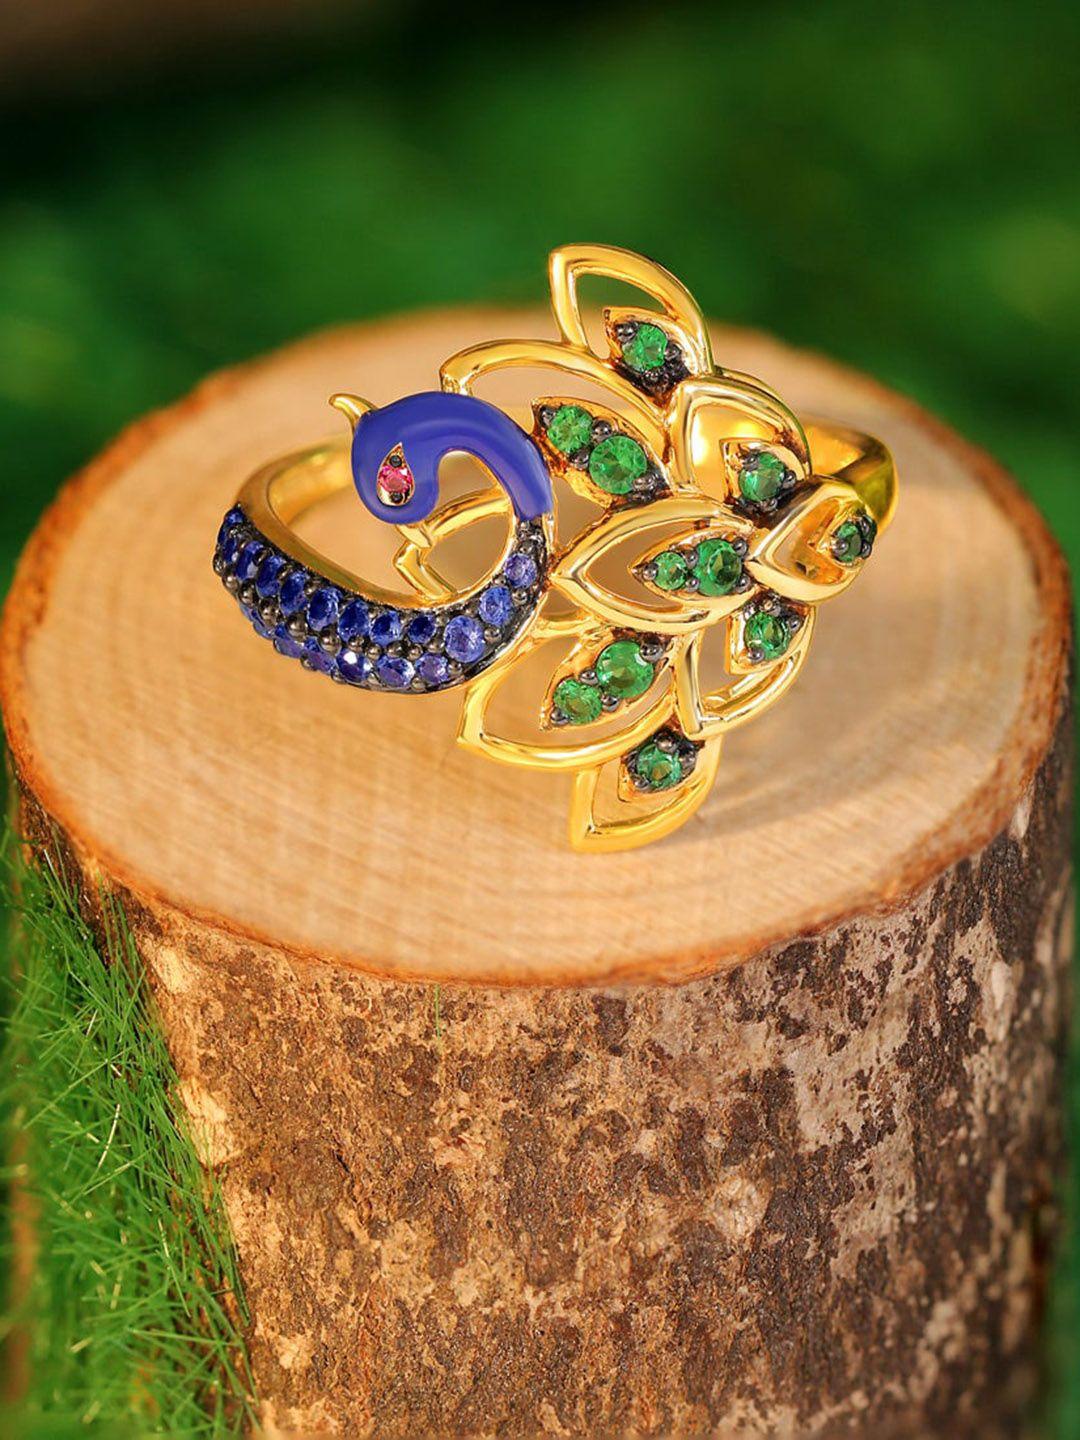 candere a kalyan jewellers company 18kt bis hallmark gold gemstone studded ring-3.98gm